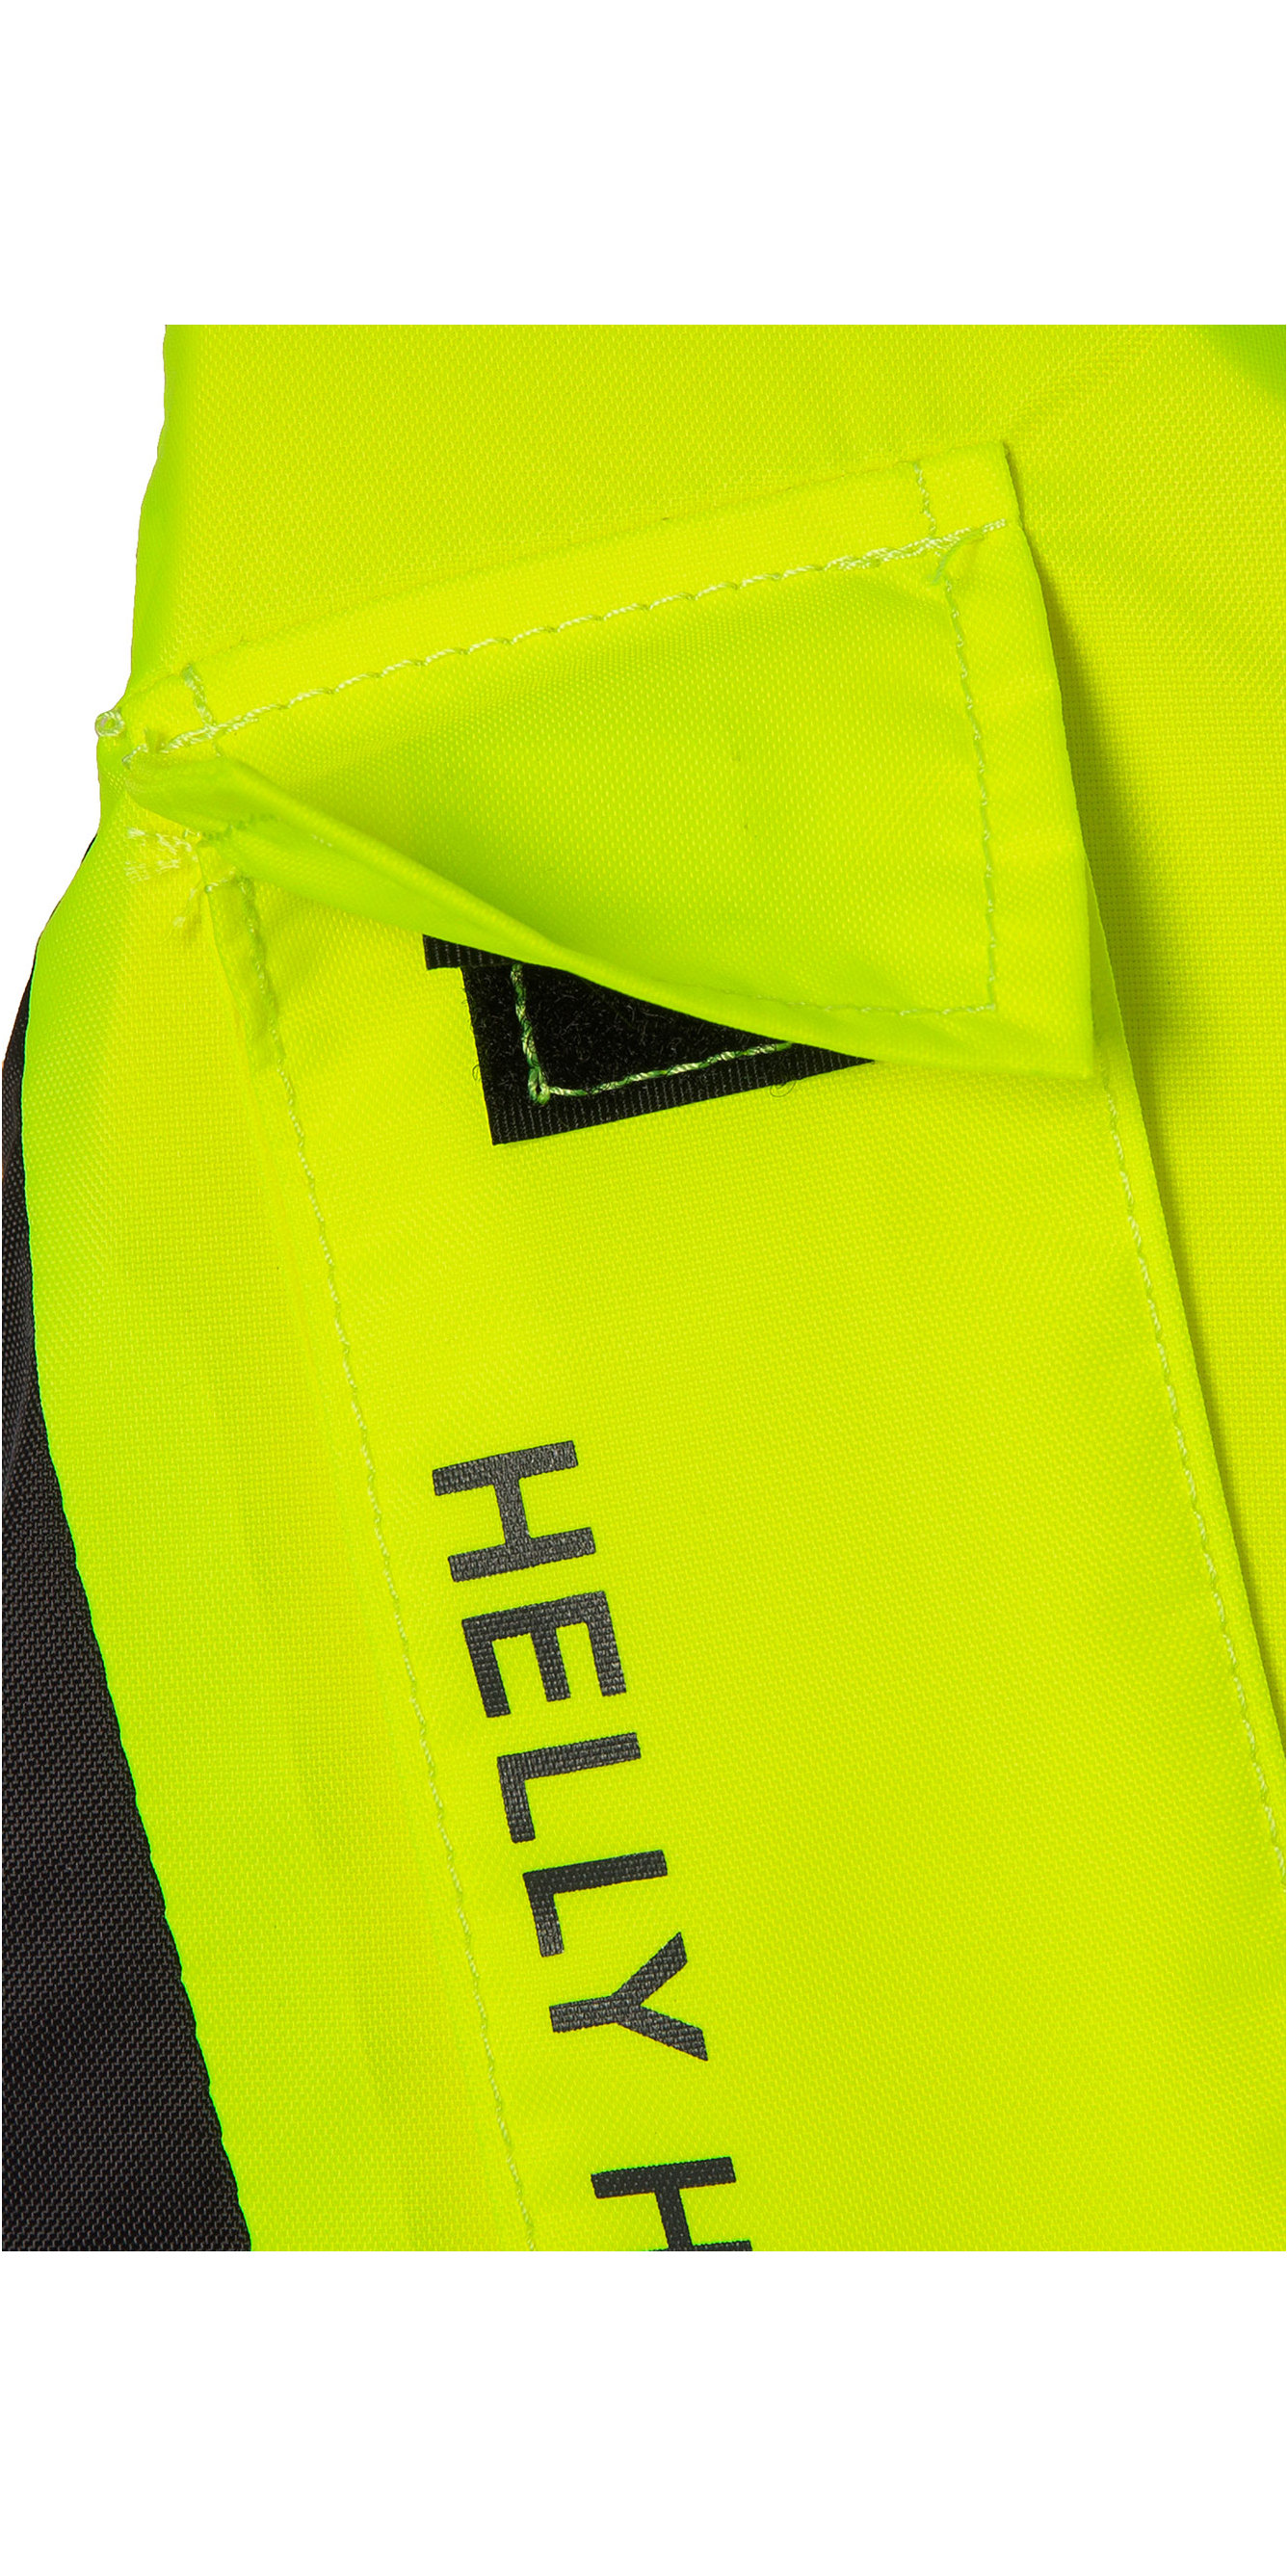 2022 Helly Hansen 50N Vest / Drijfhulpmiddel 33820 - Fluo Geel - Accessoires | Watersports Outlet